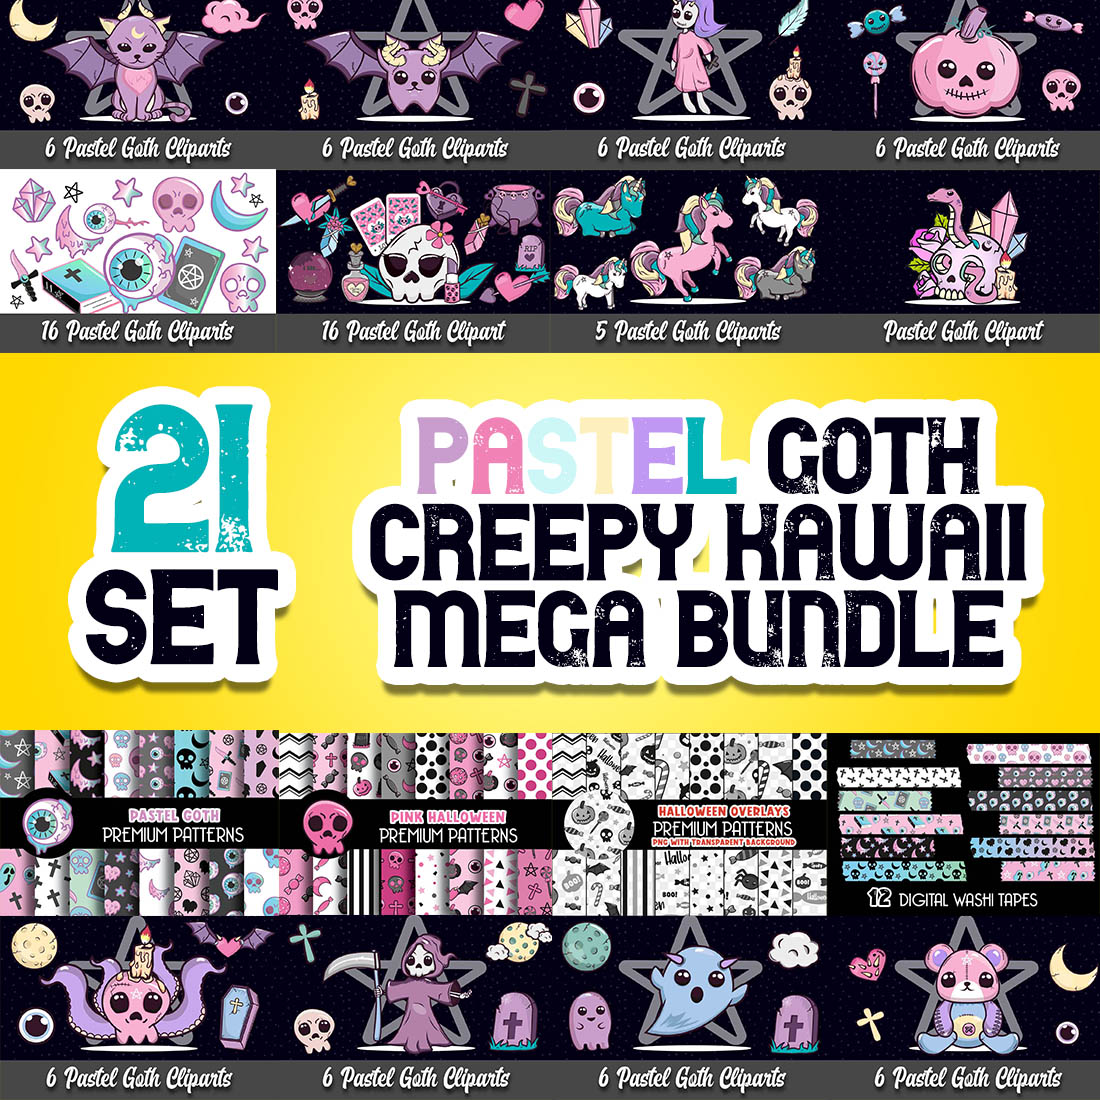 Creepy Kawaii Pastel Goth Mega Bundle cover image.